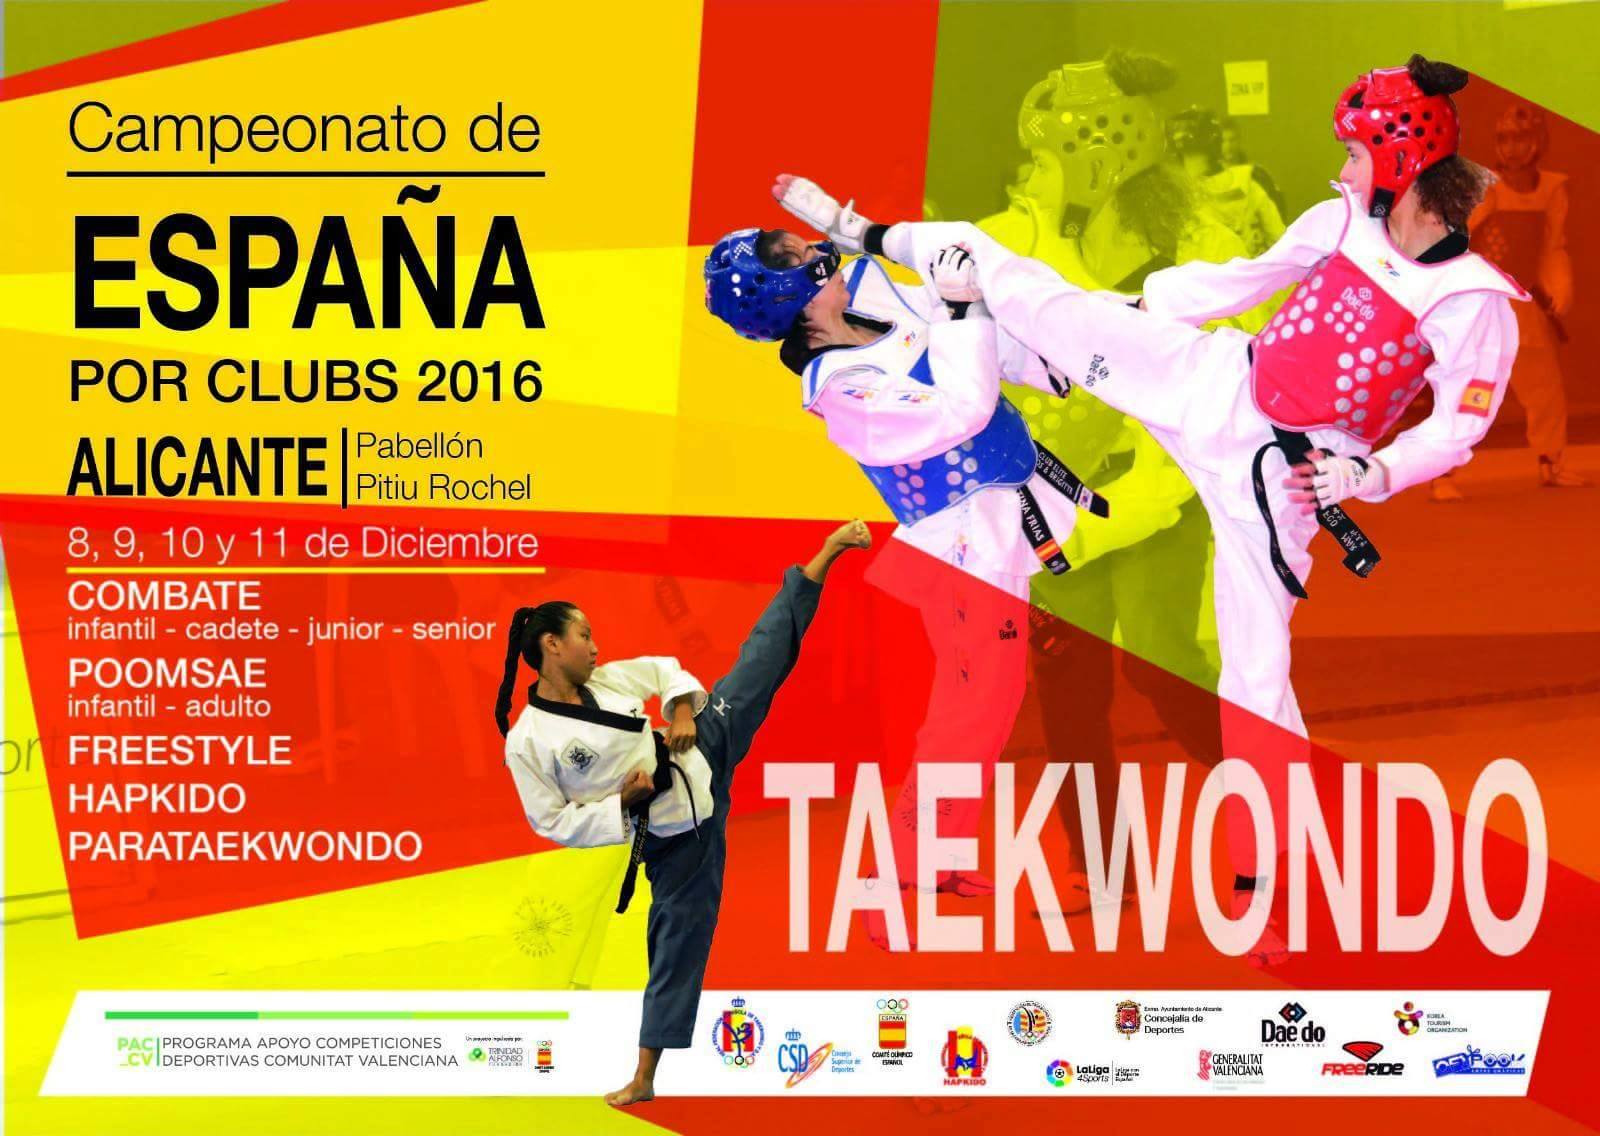 Participación jumillana en el Campeonato de España de Taekwondo